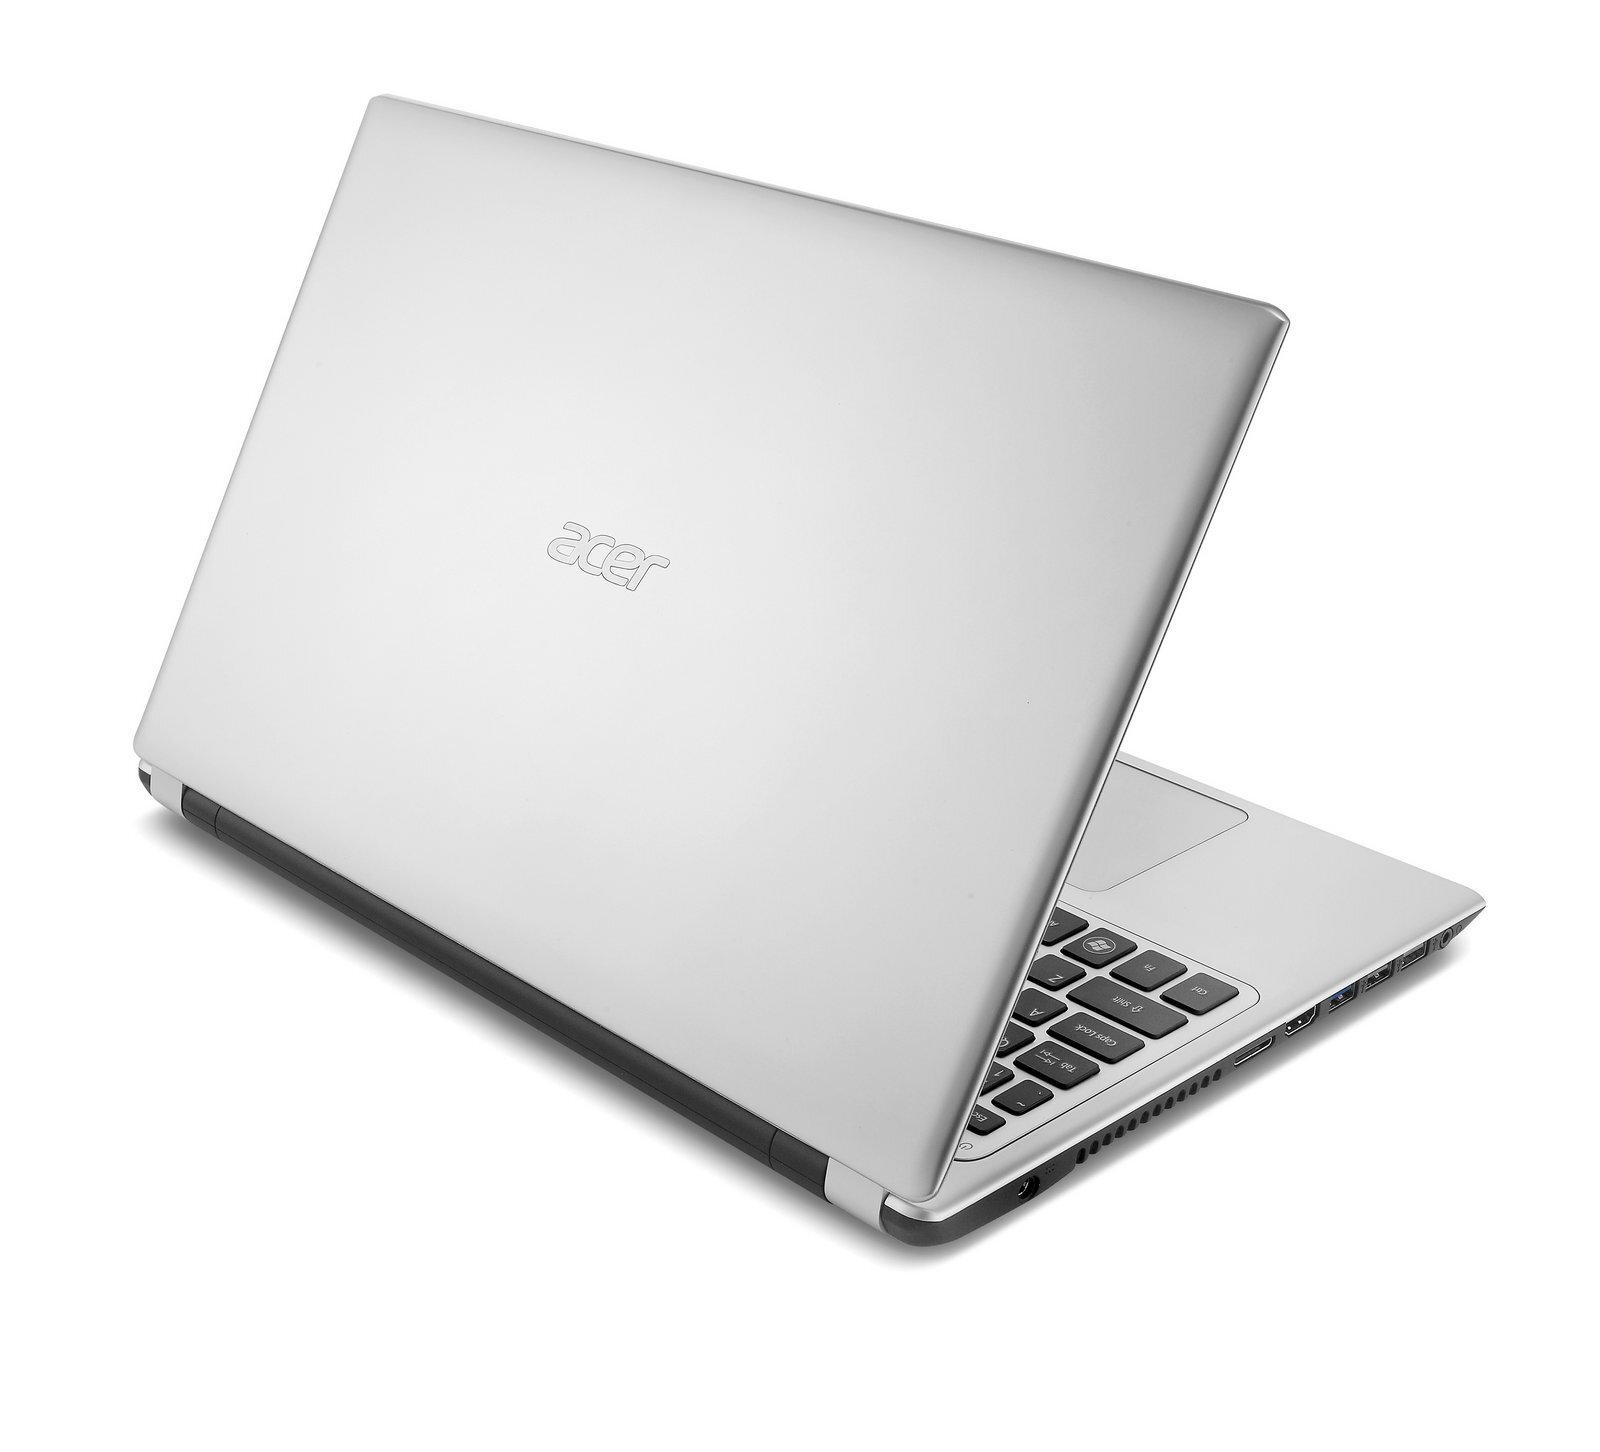 Laptop Acer AO756-877BC - Intel Celeron 877 1.4GHz, 2GB DDR3, 320GB HDD, VGA Intel HD Graphics, 11.6 inch